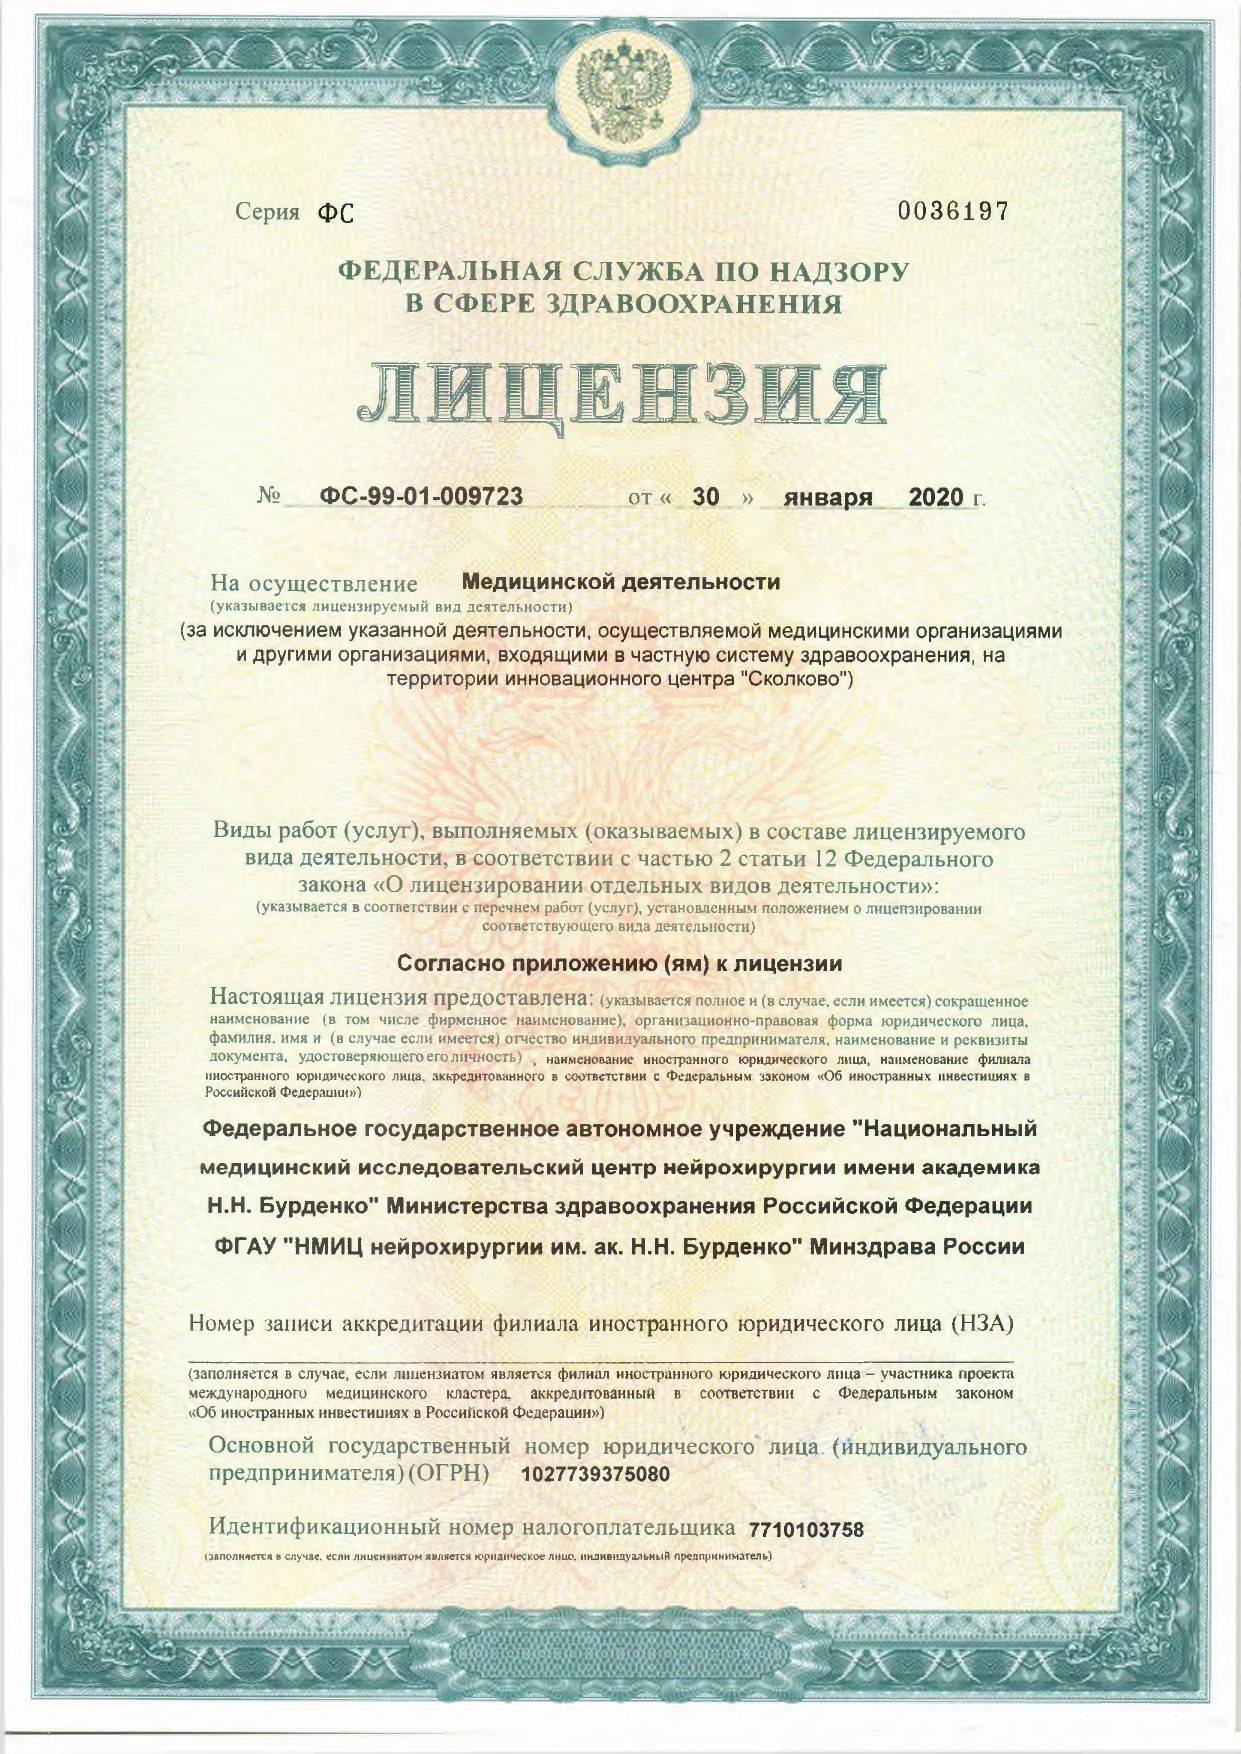 Институт нейрохирургии имени академика Н. Н. Бурденко лицензия №1